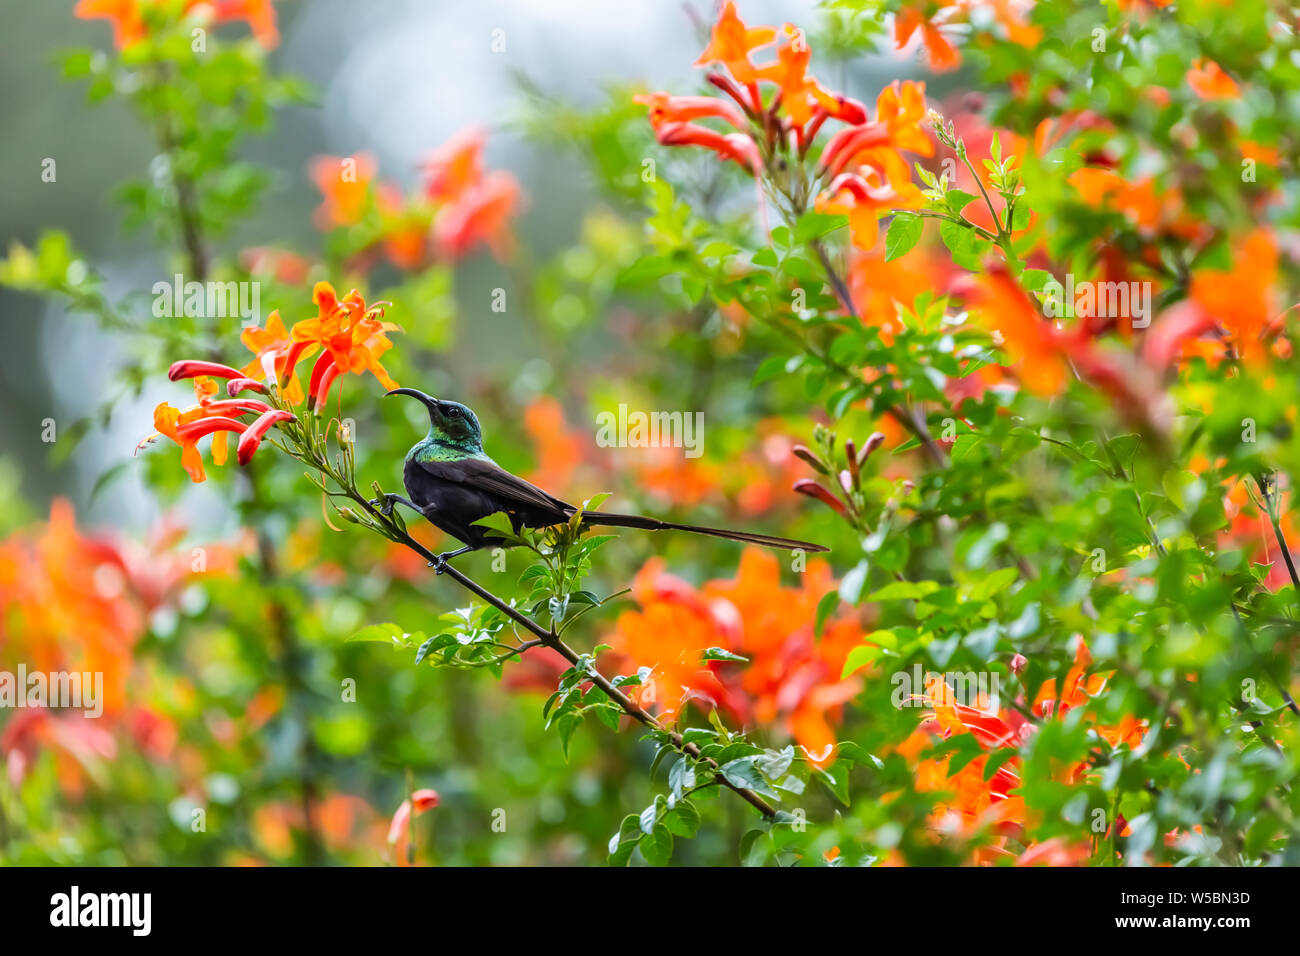 Bronze Sunbird (Nectarinia kilimensis) feeding on nectar in profile, taken in Kenya. Stock Photo